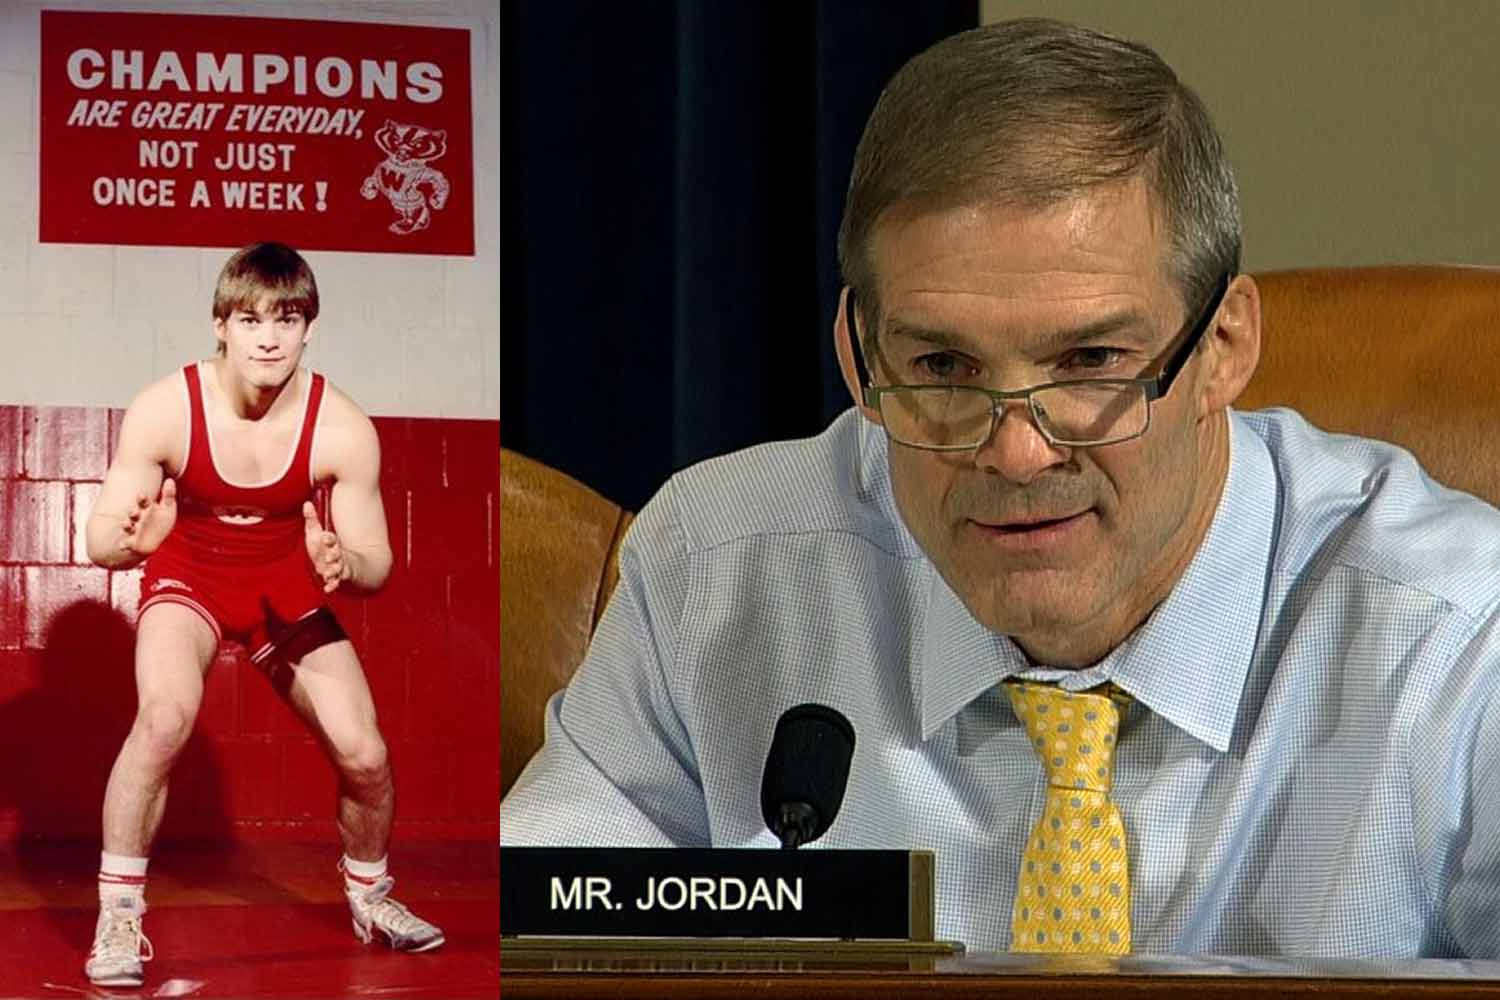 Oh, super. Jim Jordan is a Wisconsin alum - The